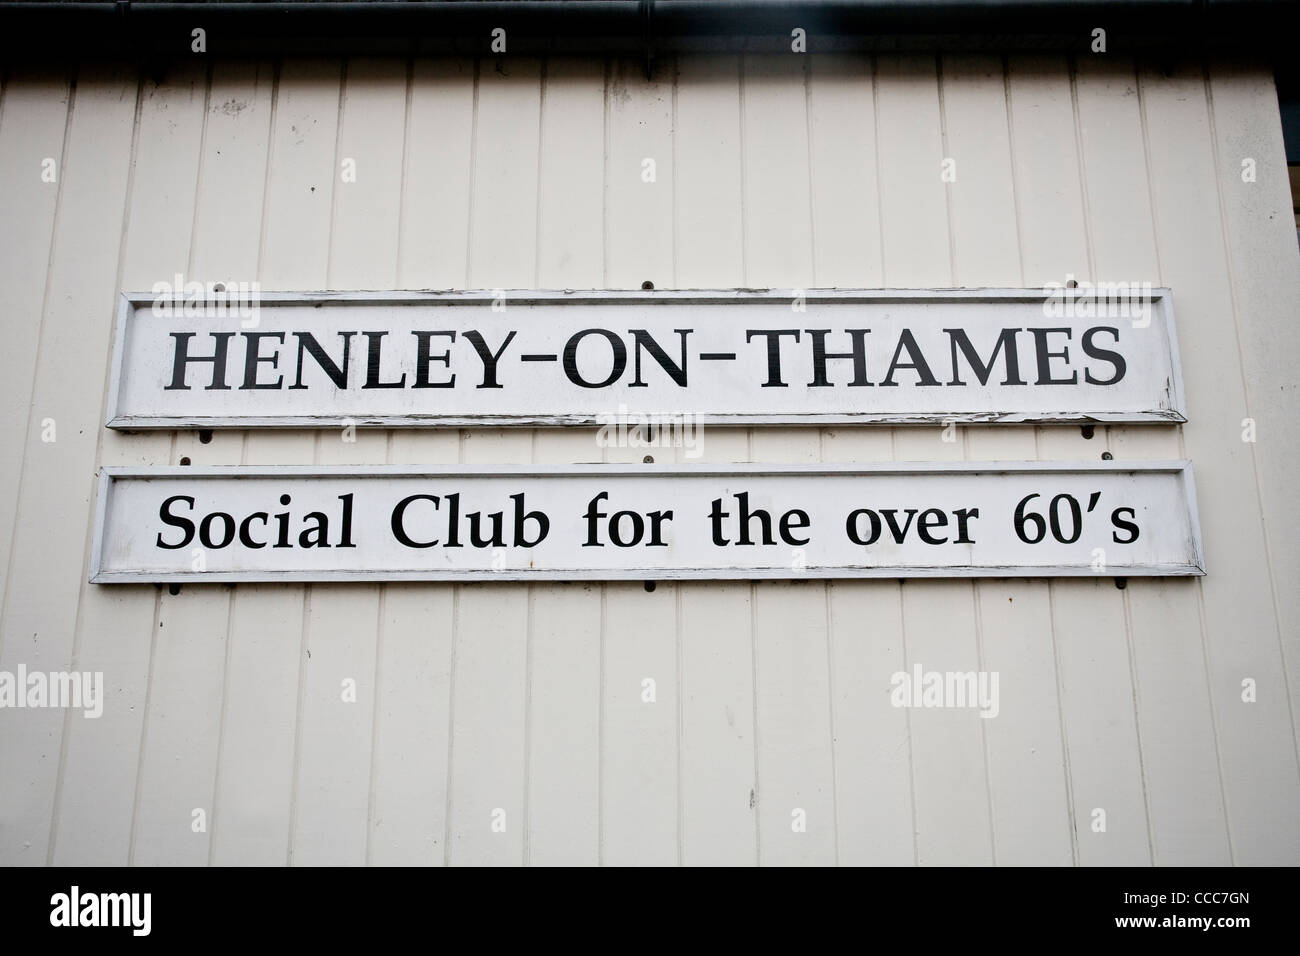 Social club per gli over 60, Henley-on-Thames, Inghilterra. Foto:Jeff Gilbert Foto Stock